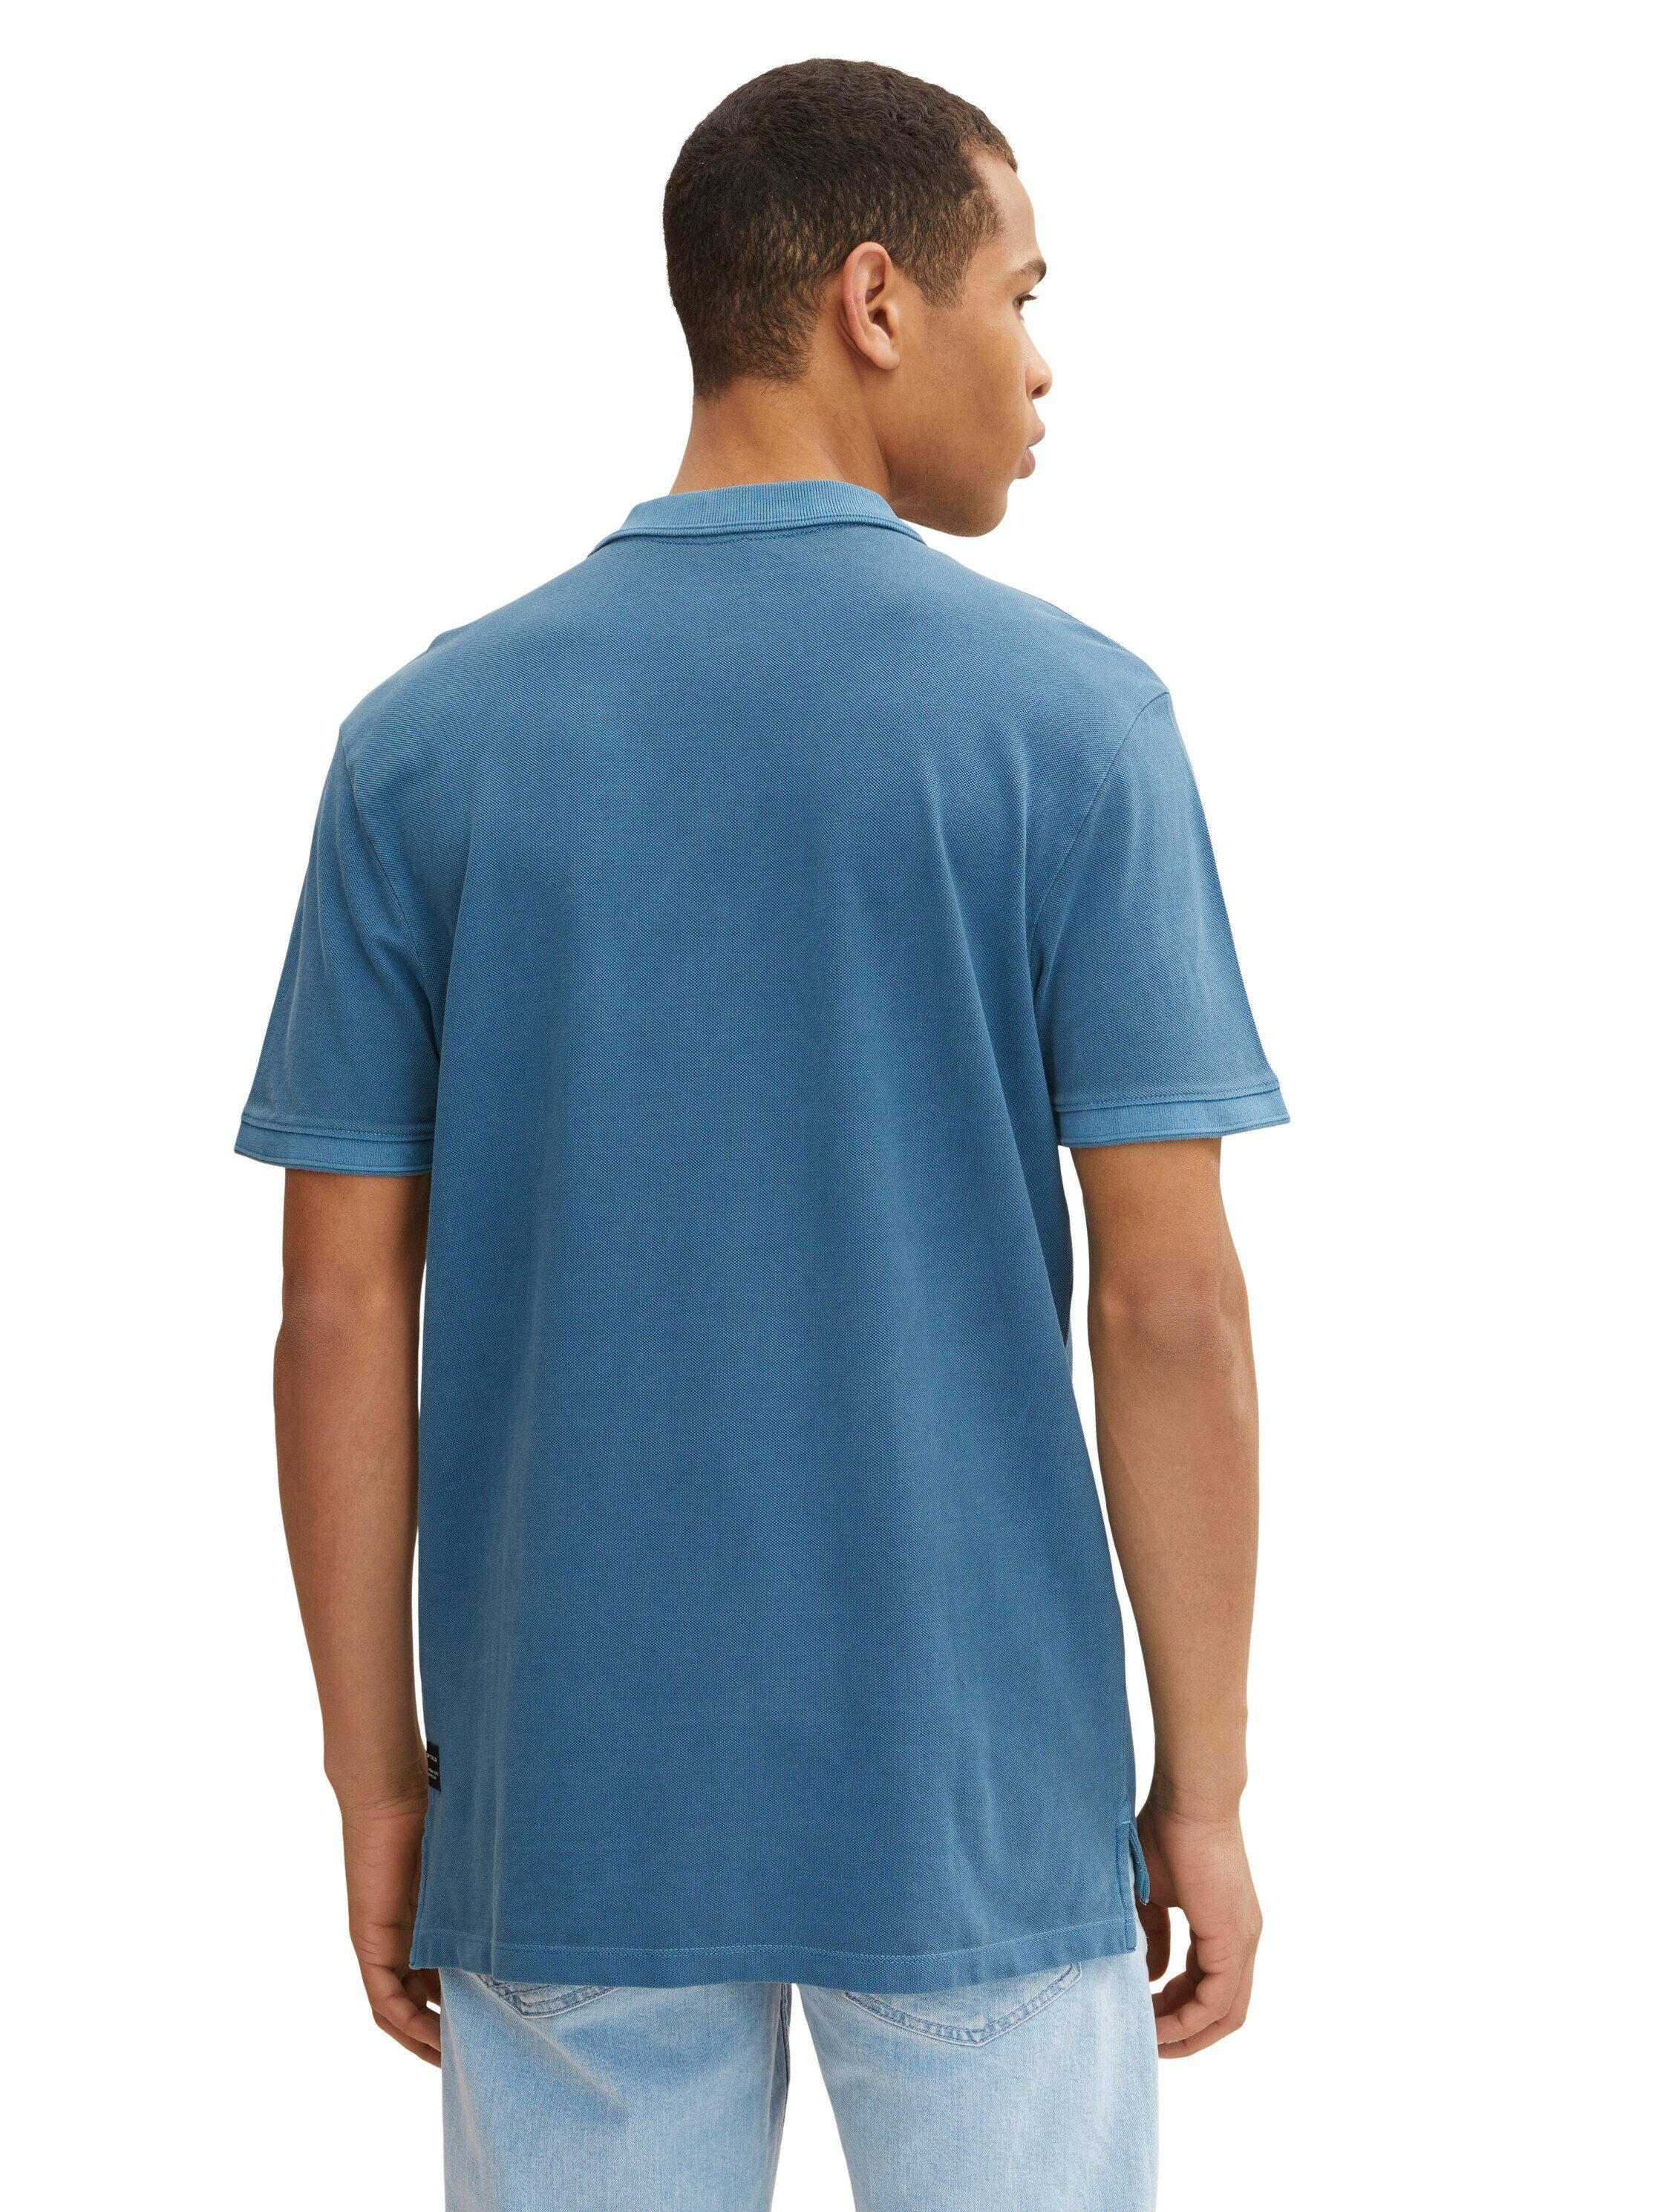 Poloshirt Polokragen Denim TOM TAILOR blau Kurzarmshirt TAILOR mit Poloshirt Garment TOM